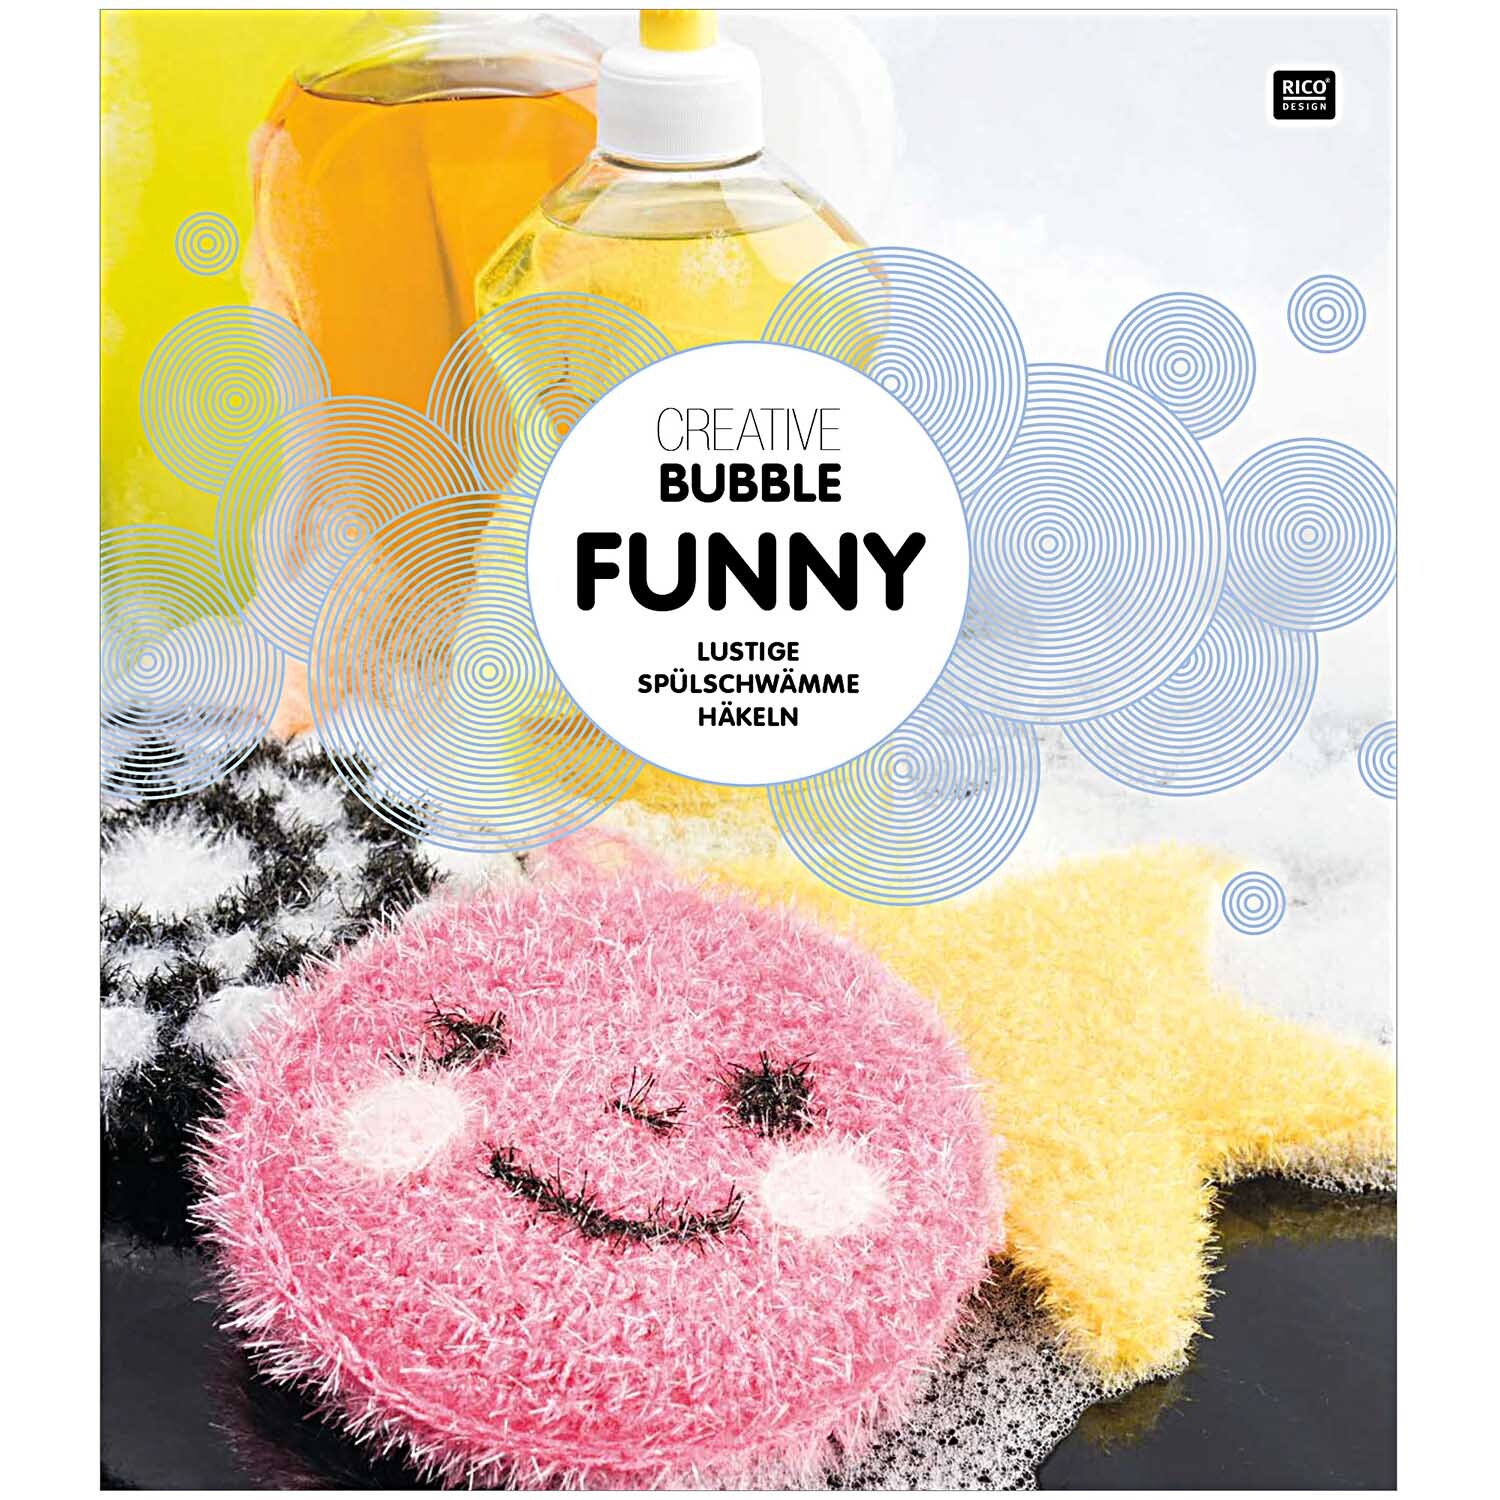 Creative Bubble Funny - lustige Spülschwämme häkeln